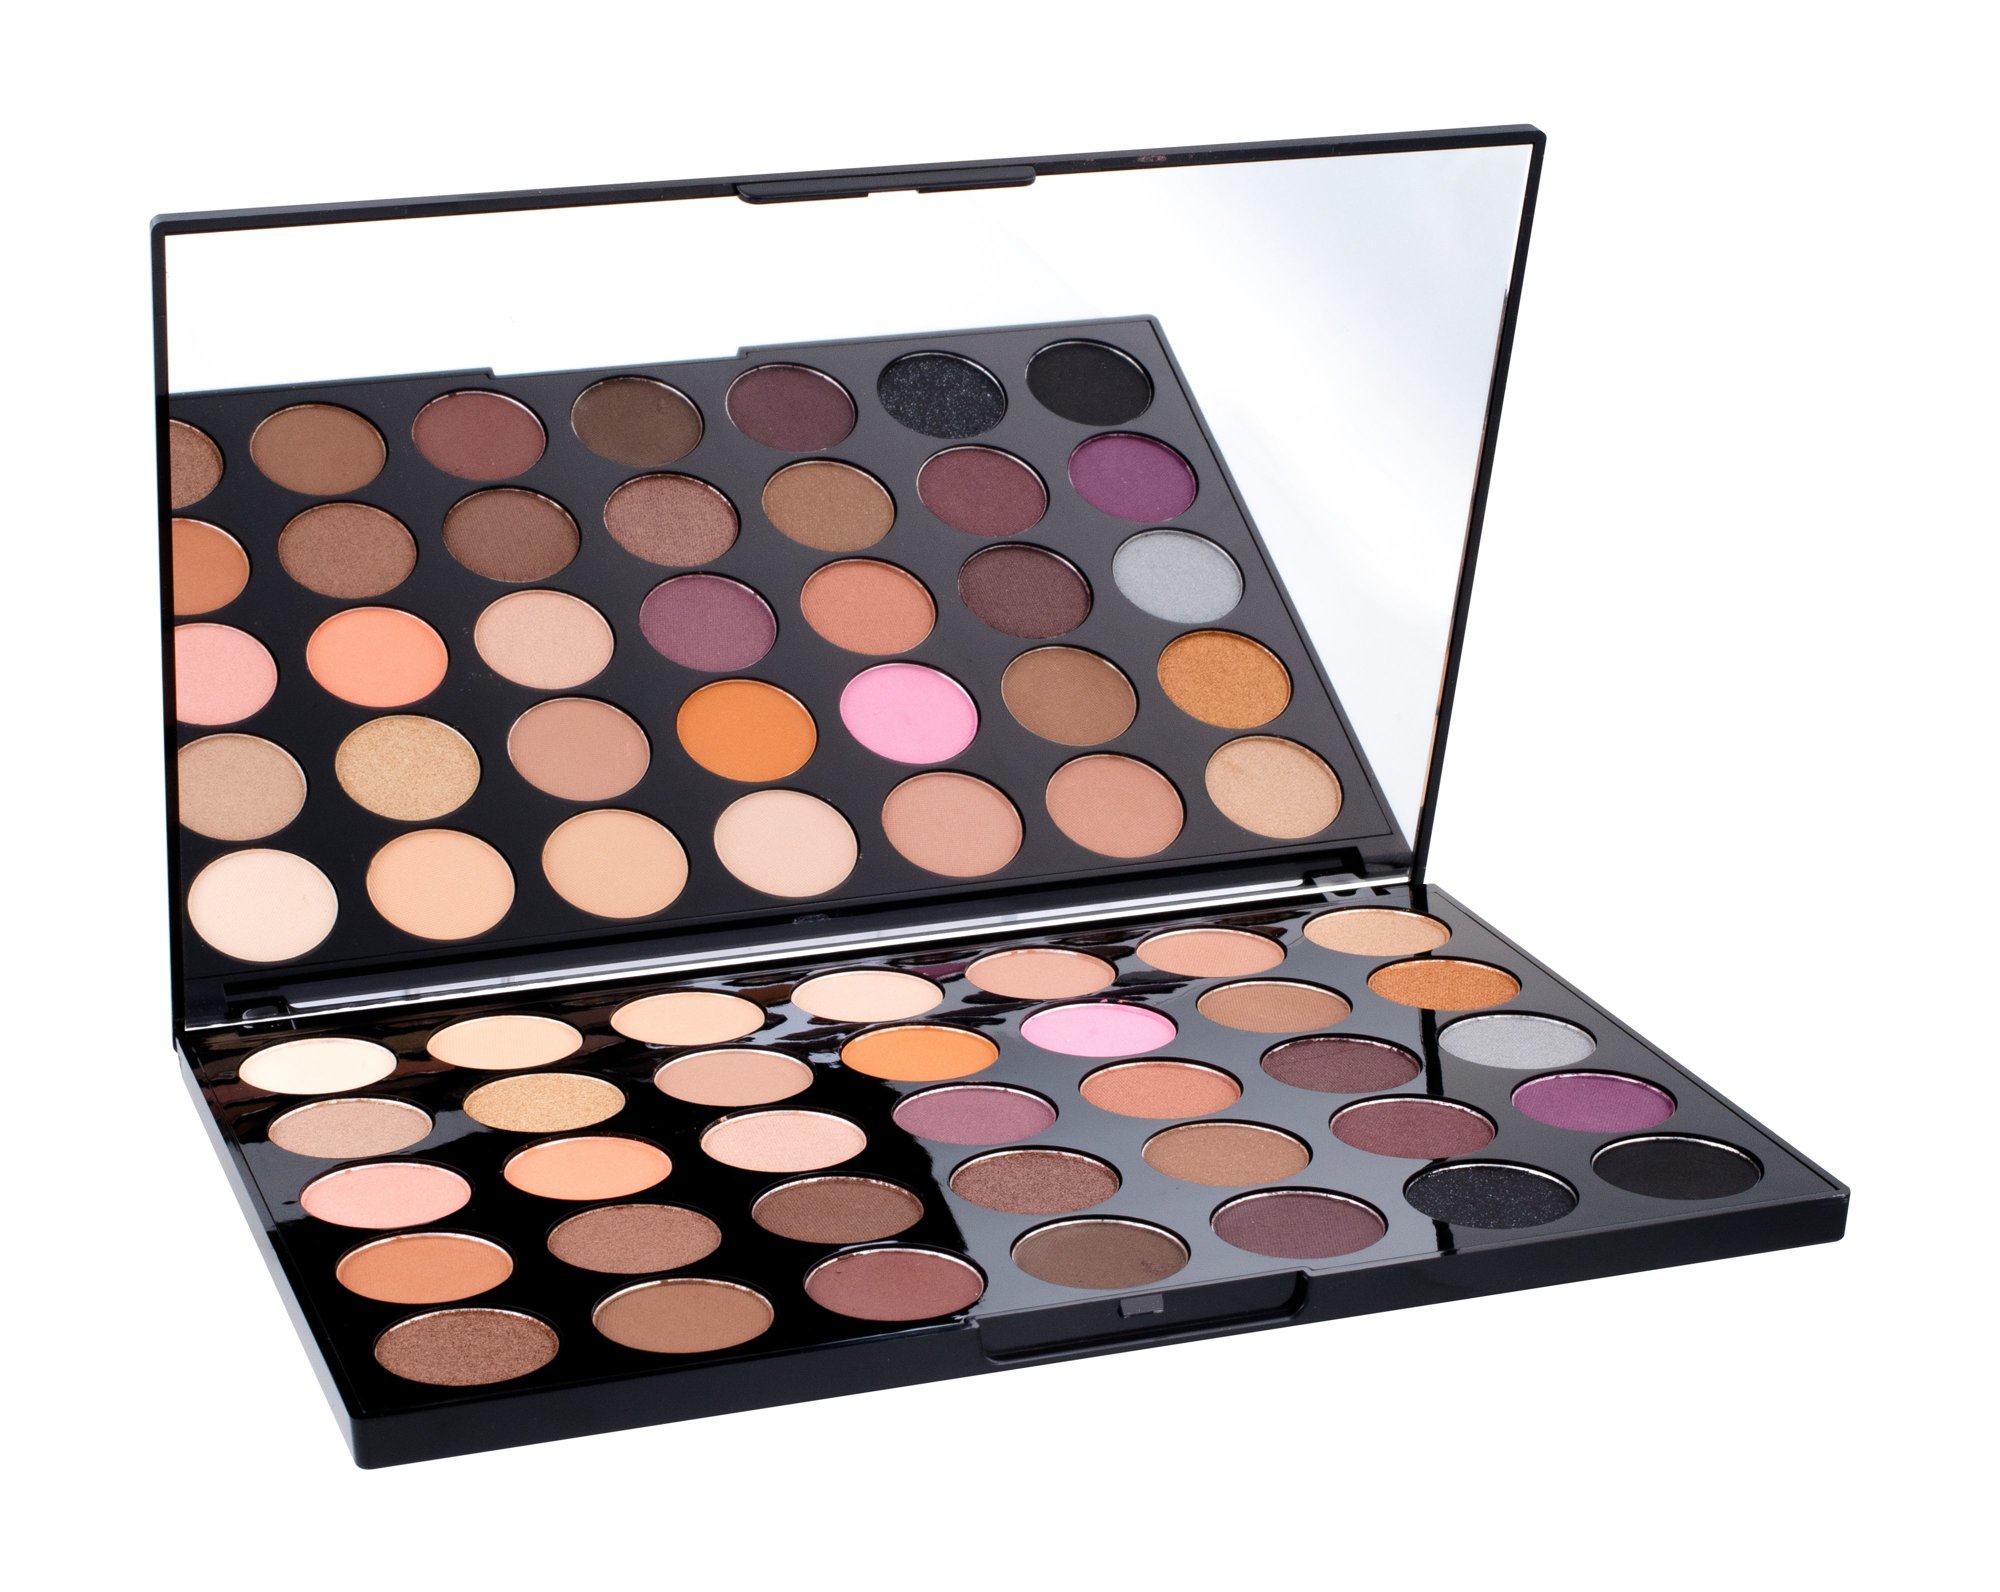 Makeup Revolution London Pro HD Palette Amplified 35 29,995g šešėliai